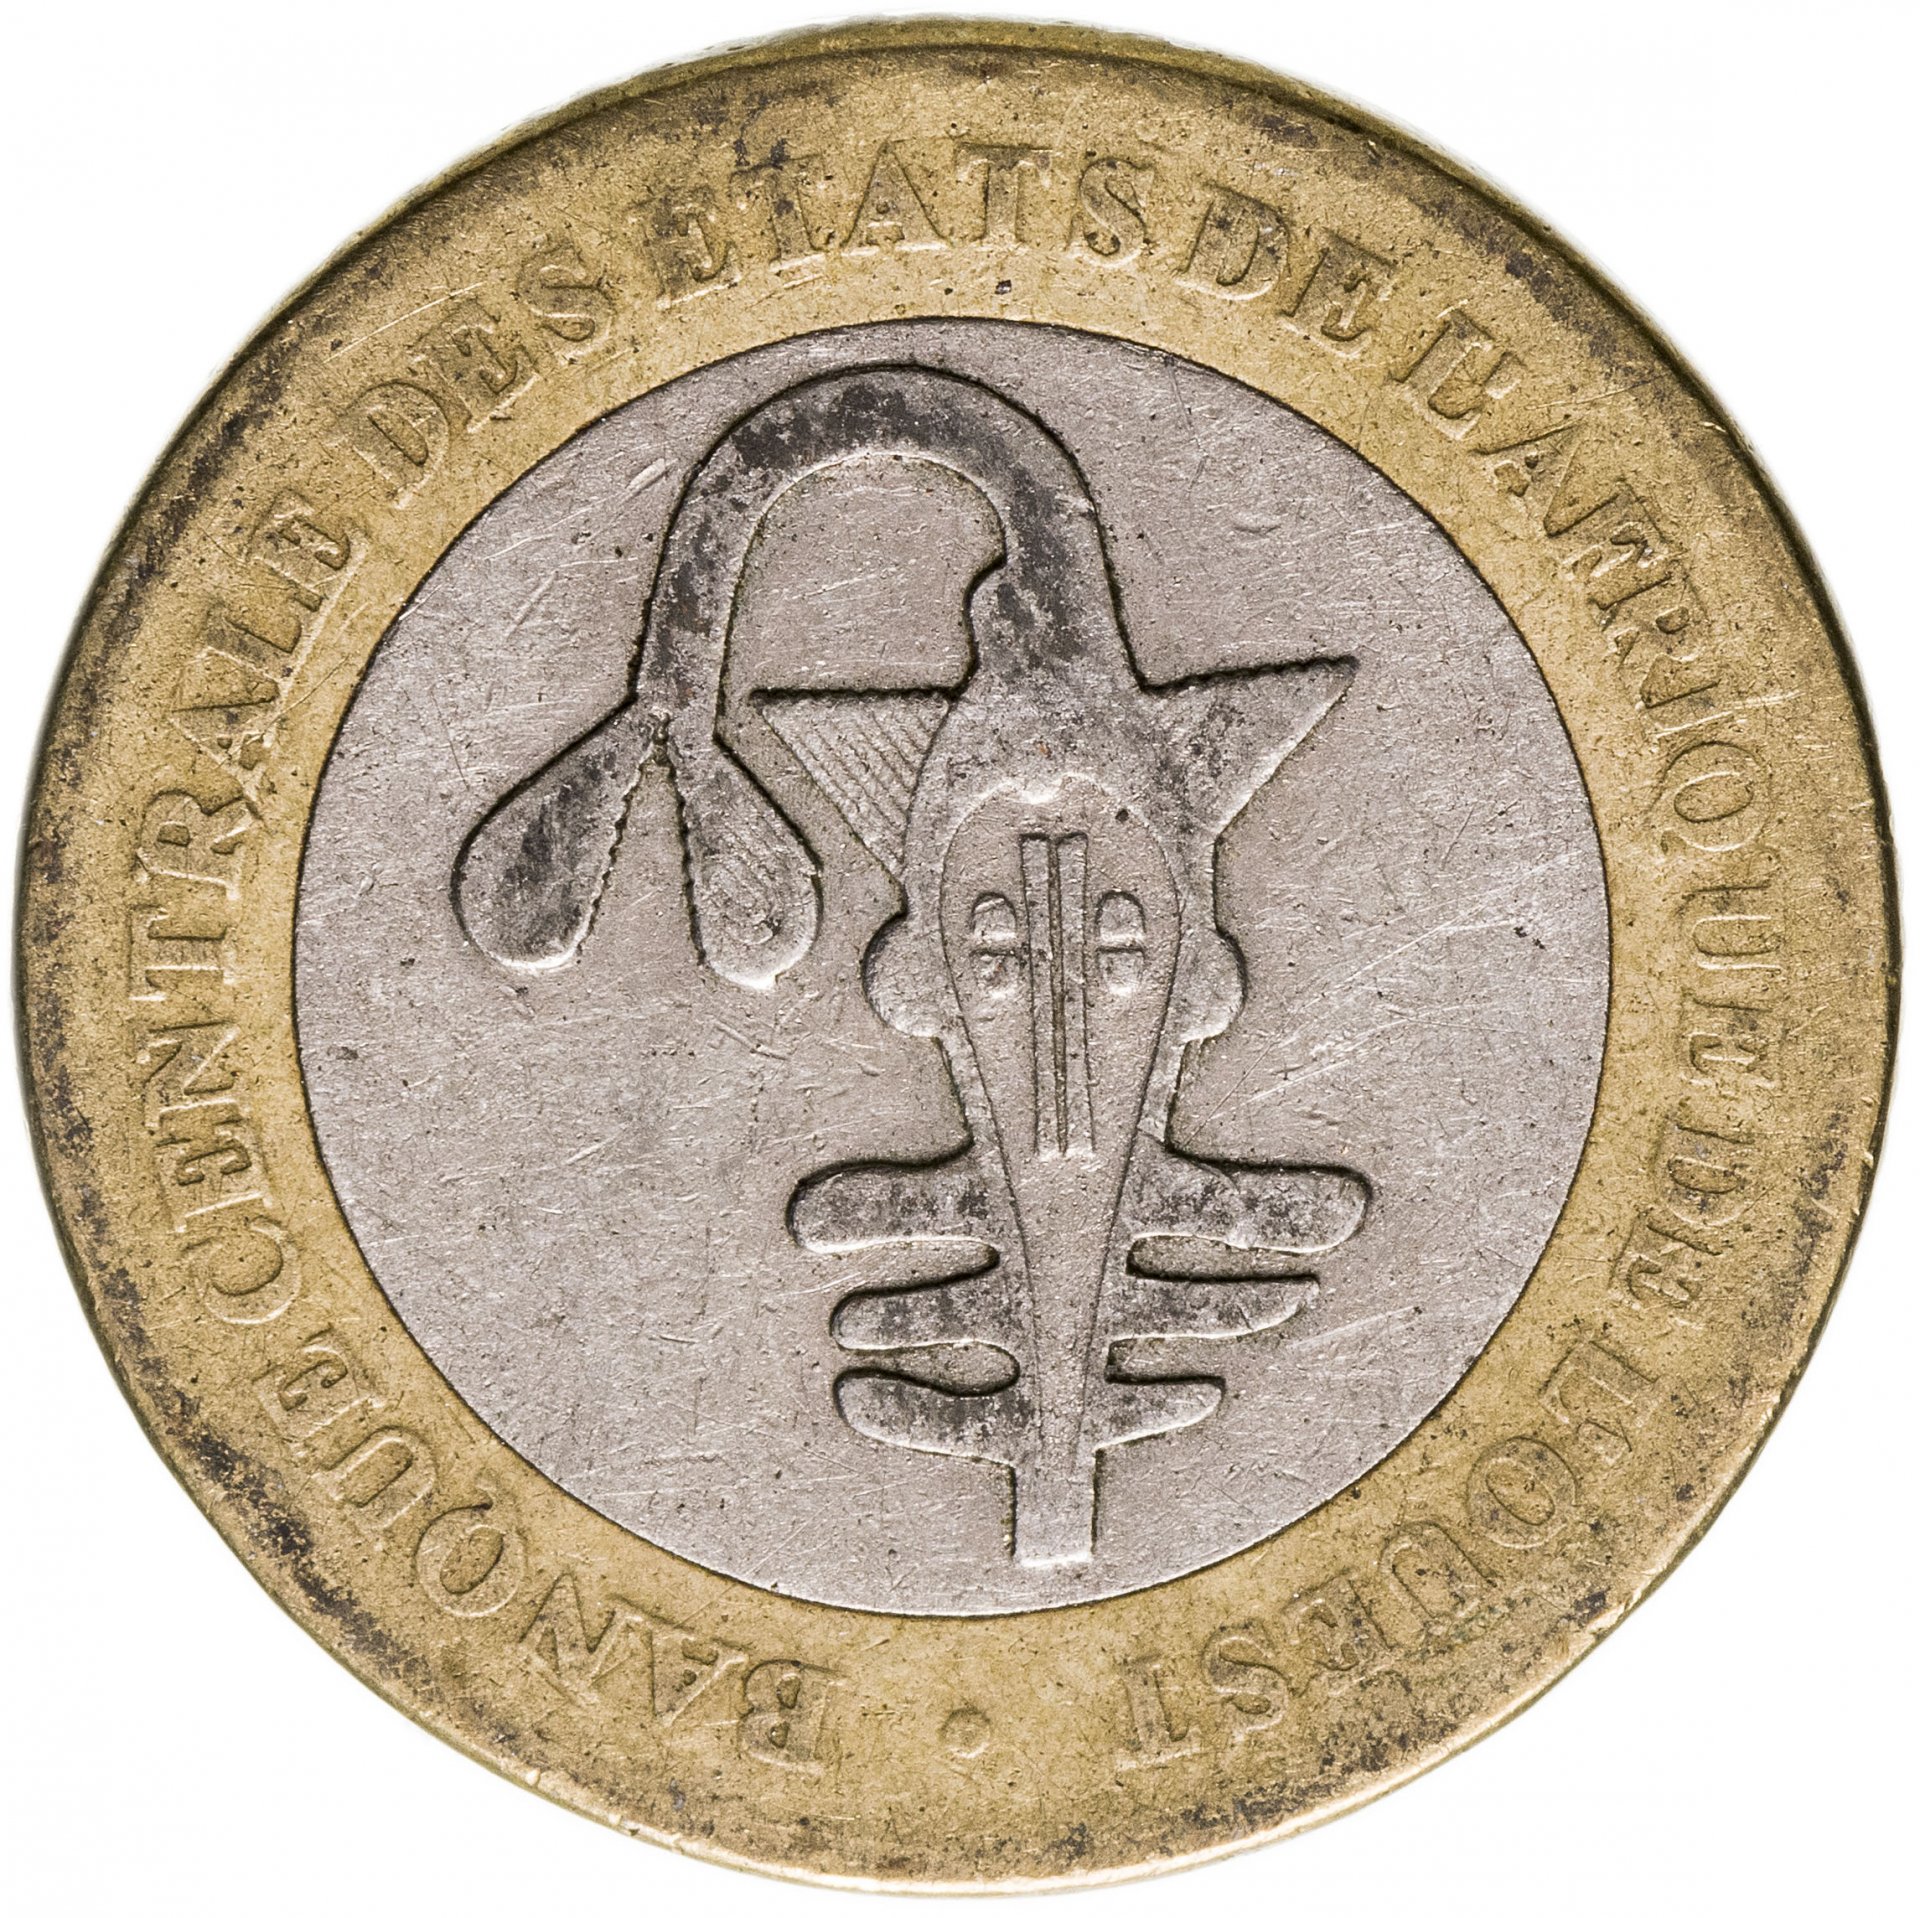 500 франков в рублях. Монета 500 франков франксефа. Западная Африка 500 франков. Монеты Западной Африки. Монетка Западный.